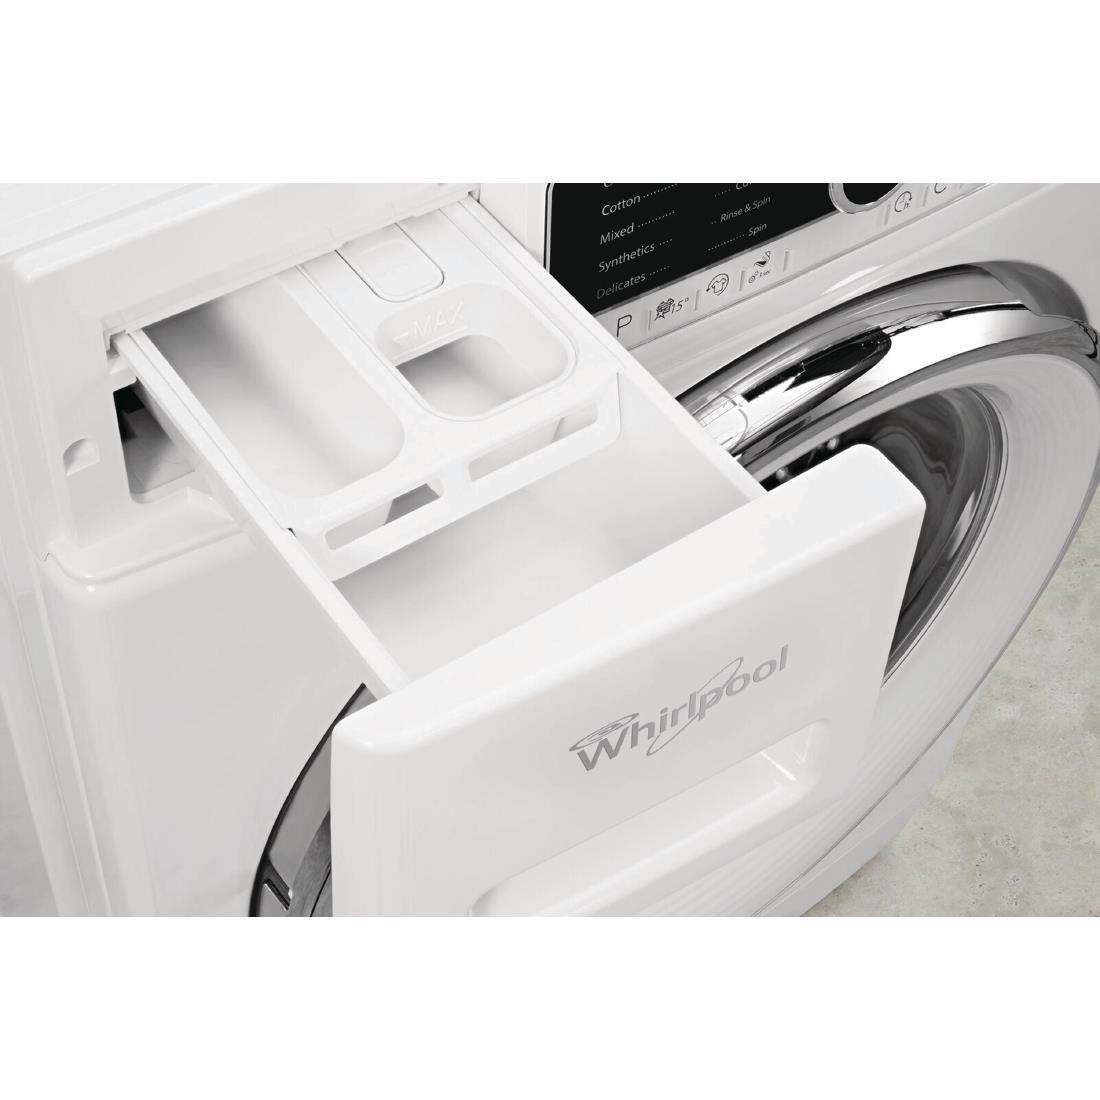 Whirlpool Commercial Washing Machine White 11kg - DW616  - 2